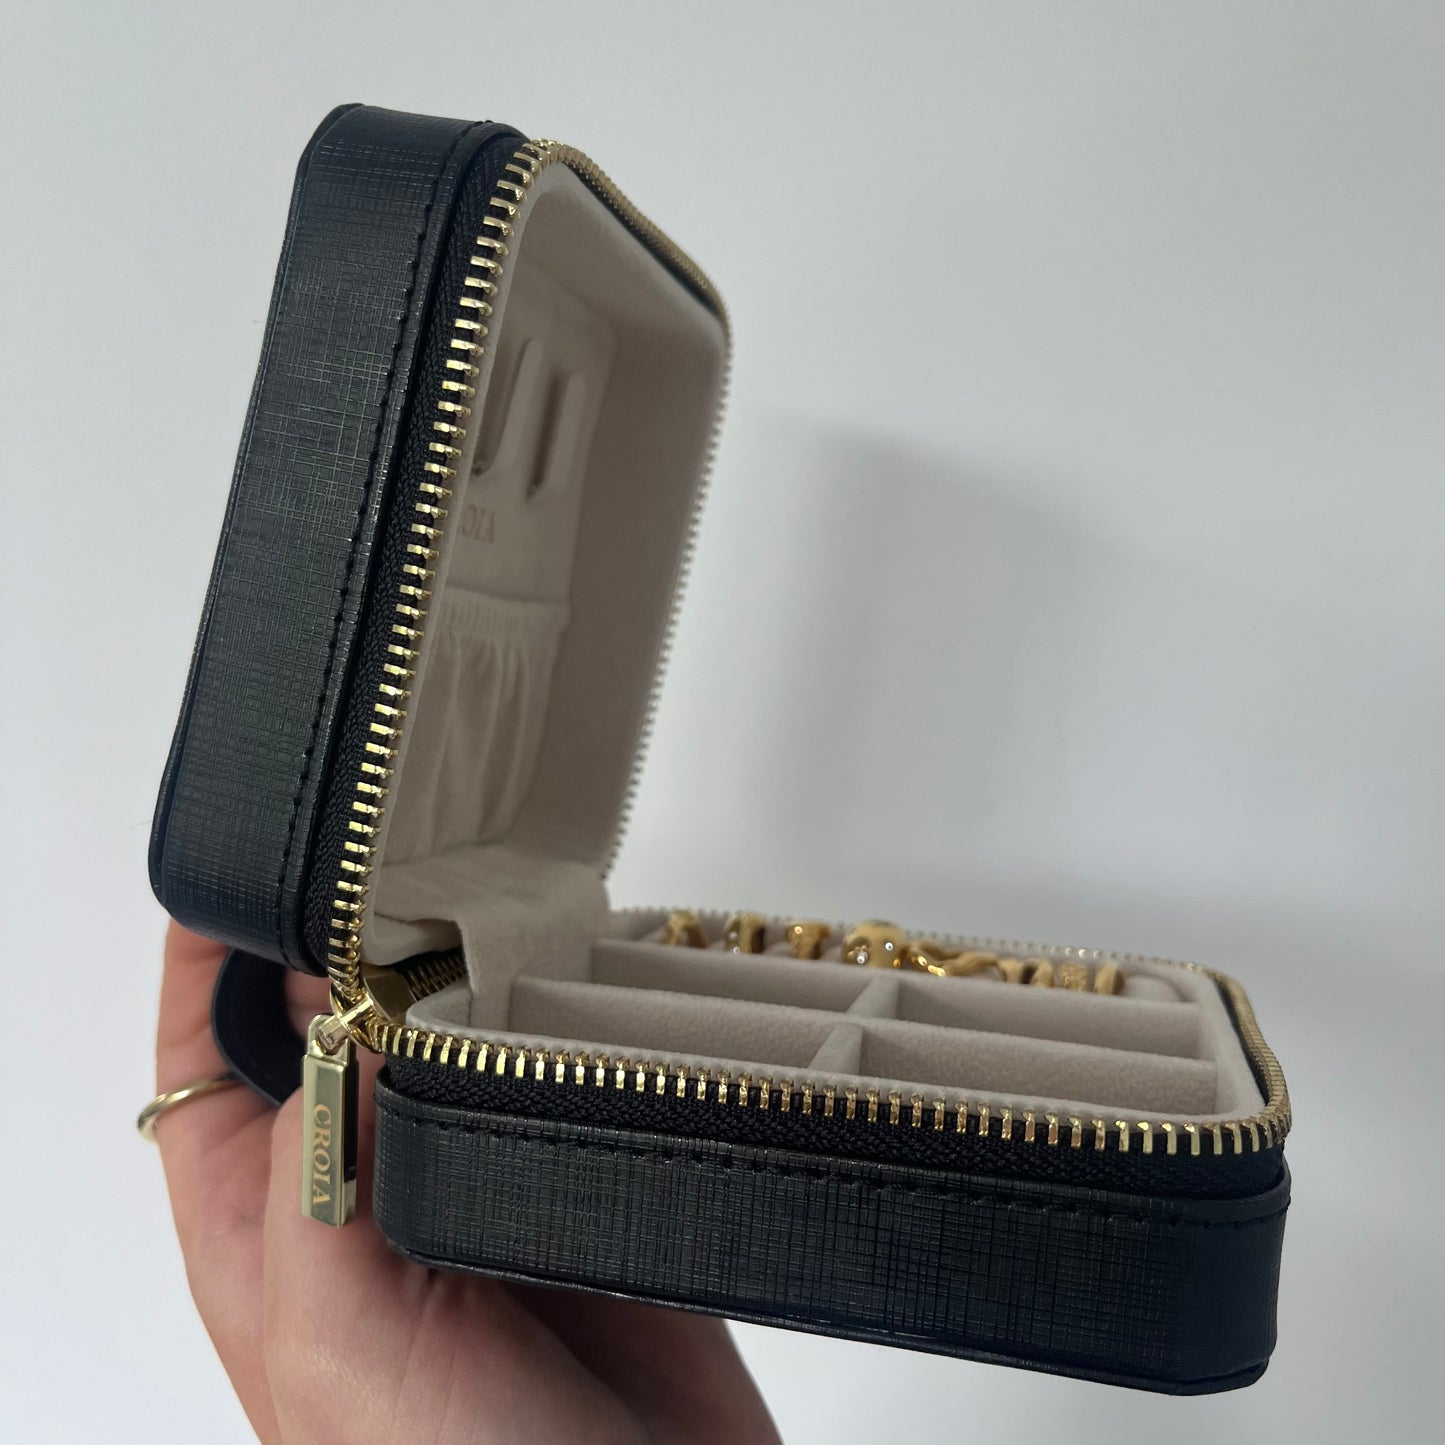 Black Bespoke Jewellery Travel Case - PU Saffiano Leather